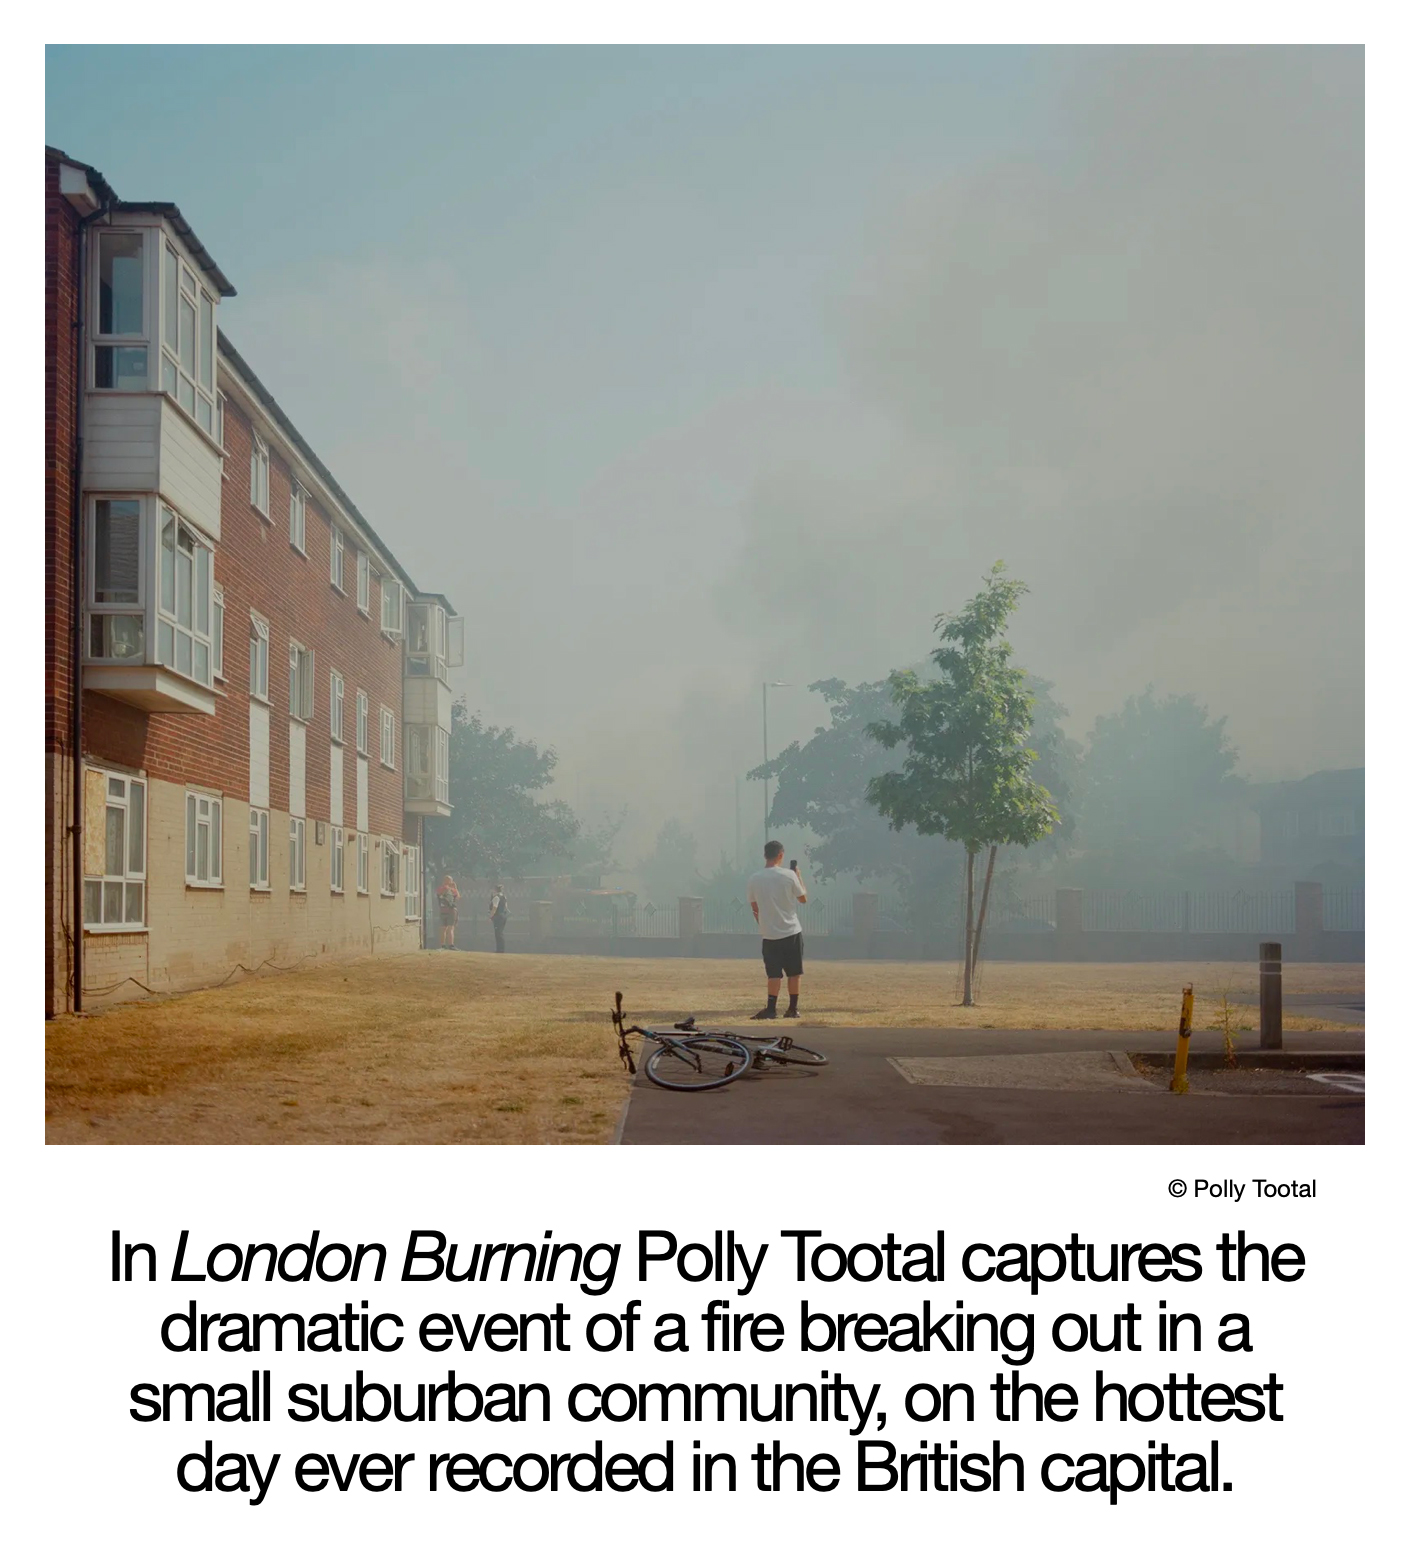 PhMuseum - London Burning